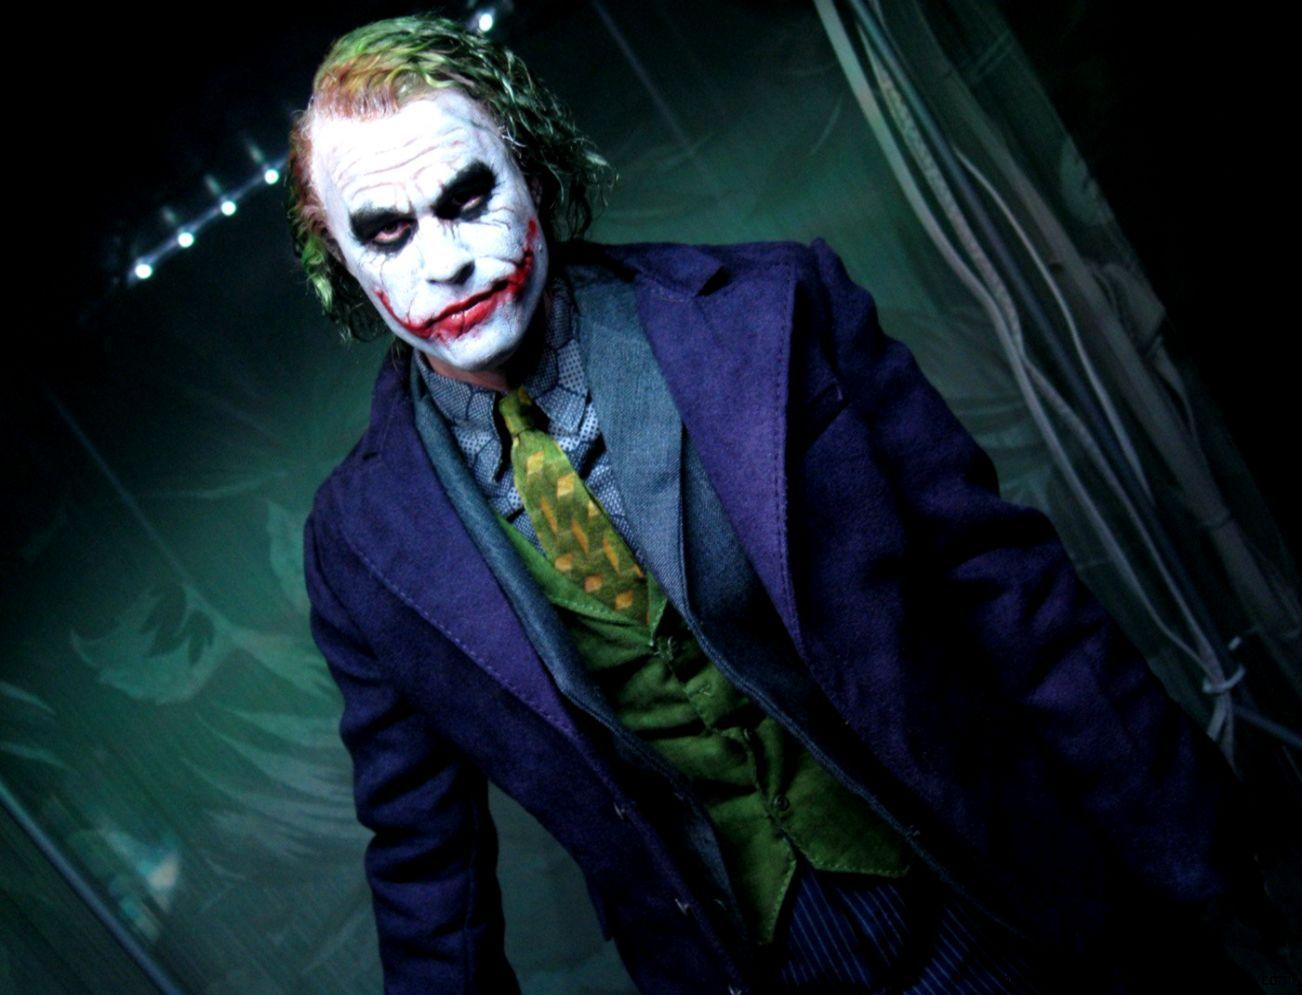 Dark Knight Joker Face Wallpapers - Top Free Dark Knight Joker Face ...